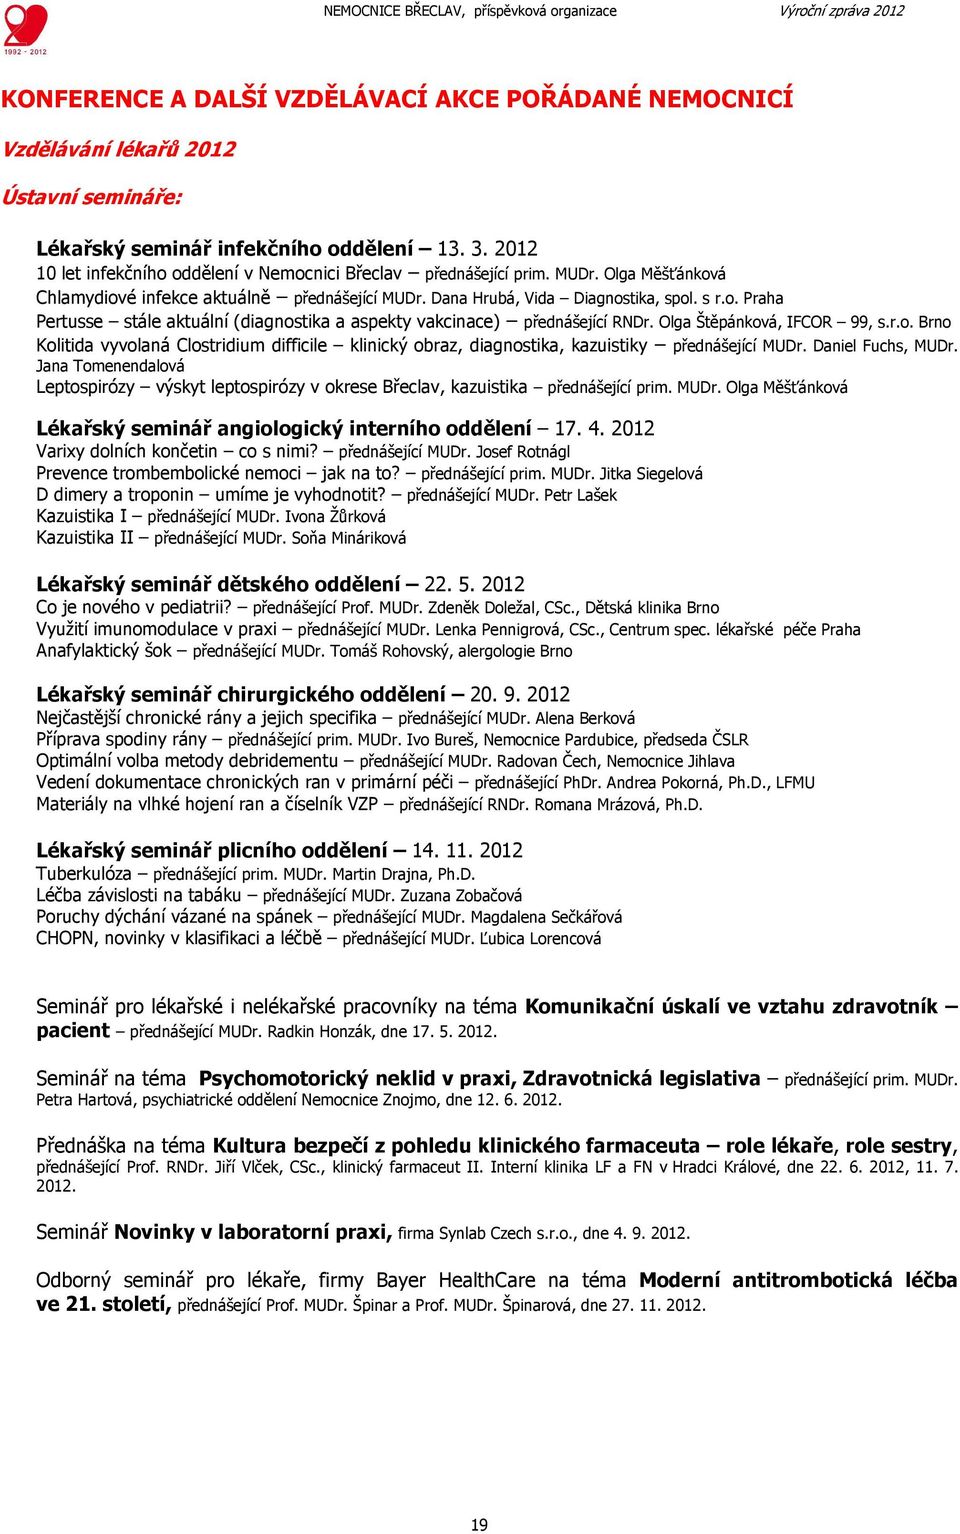 Olga Štěpánková, IFCOR 99, s.r.o. Brno Kolitida vyvolaná Clostridium difficile klinický obraz, diagnostika, kazuistiky přednášející MUDr. Daniel Fuchs, MUDr.